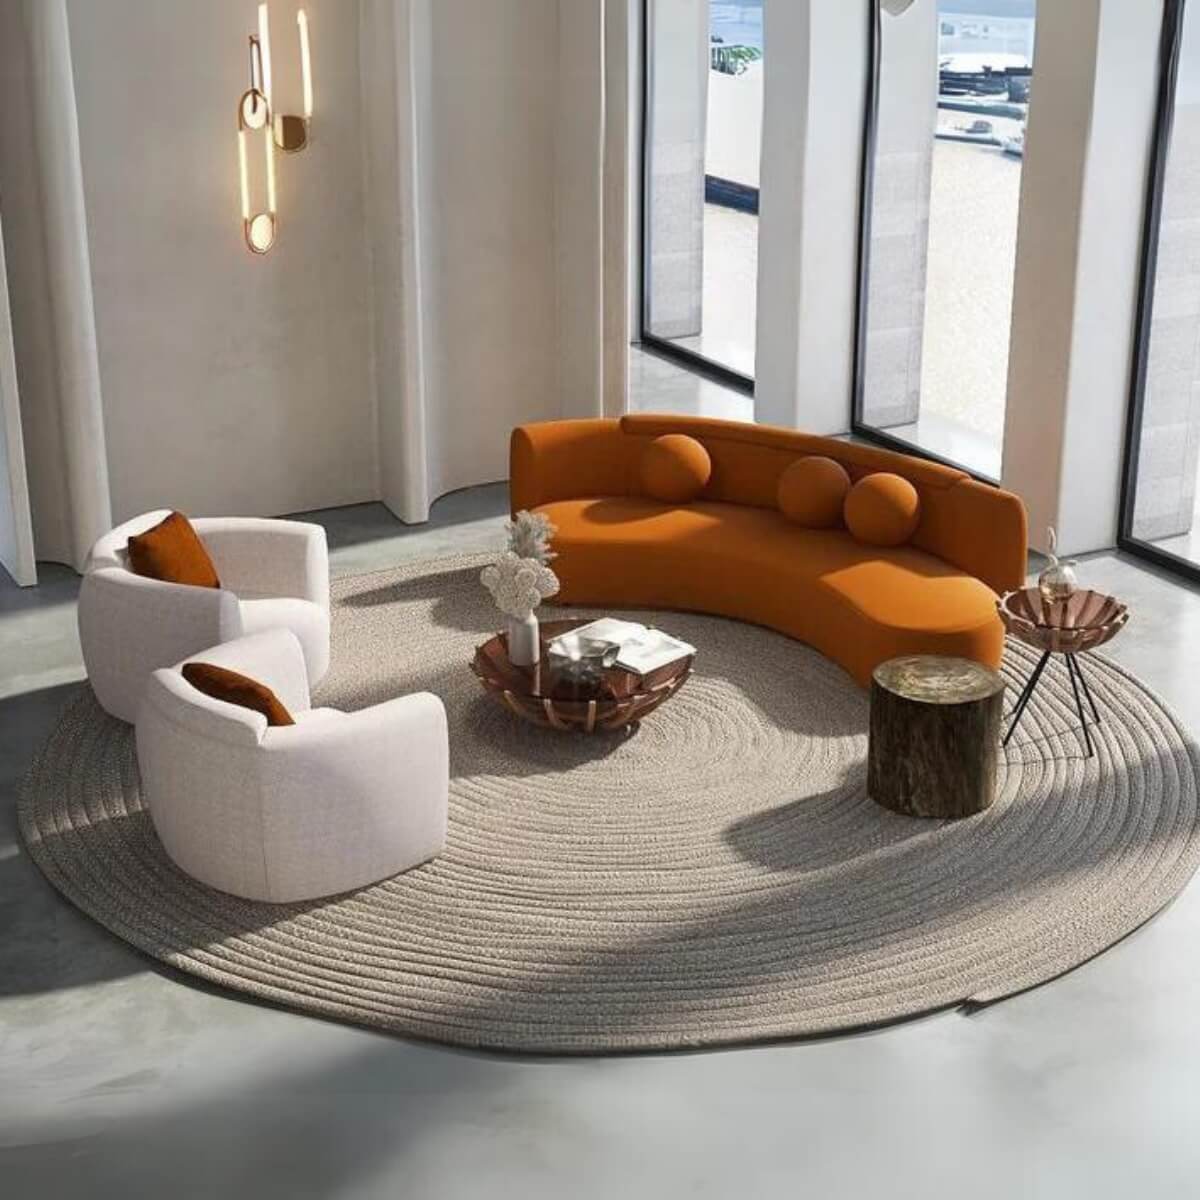 Astral Ascent Cotton Linen Sofa Set - A Celestial Experience